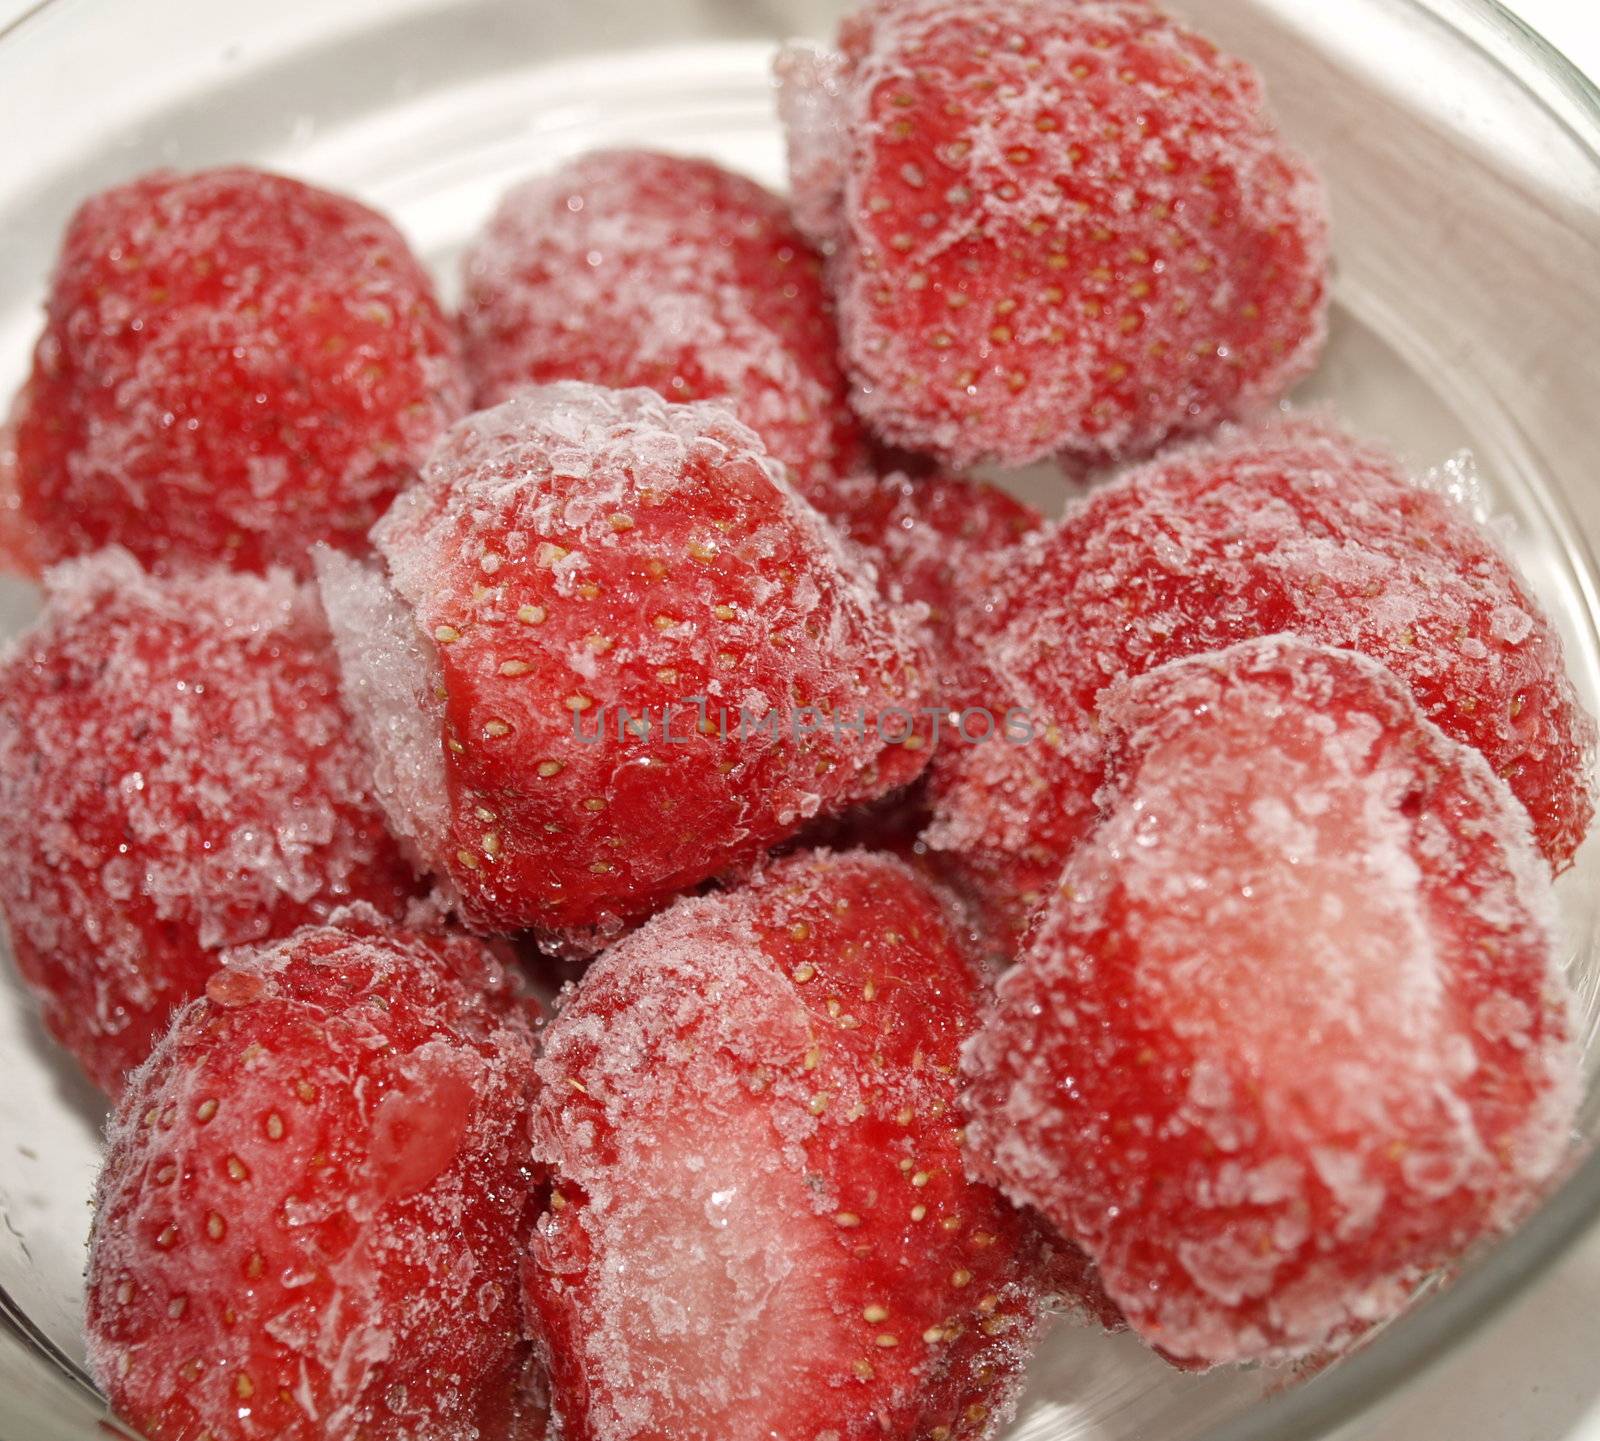 frozen strawberries by viviolsen